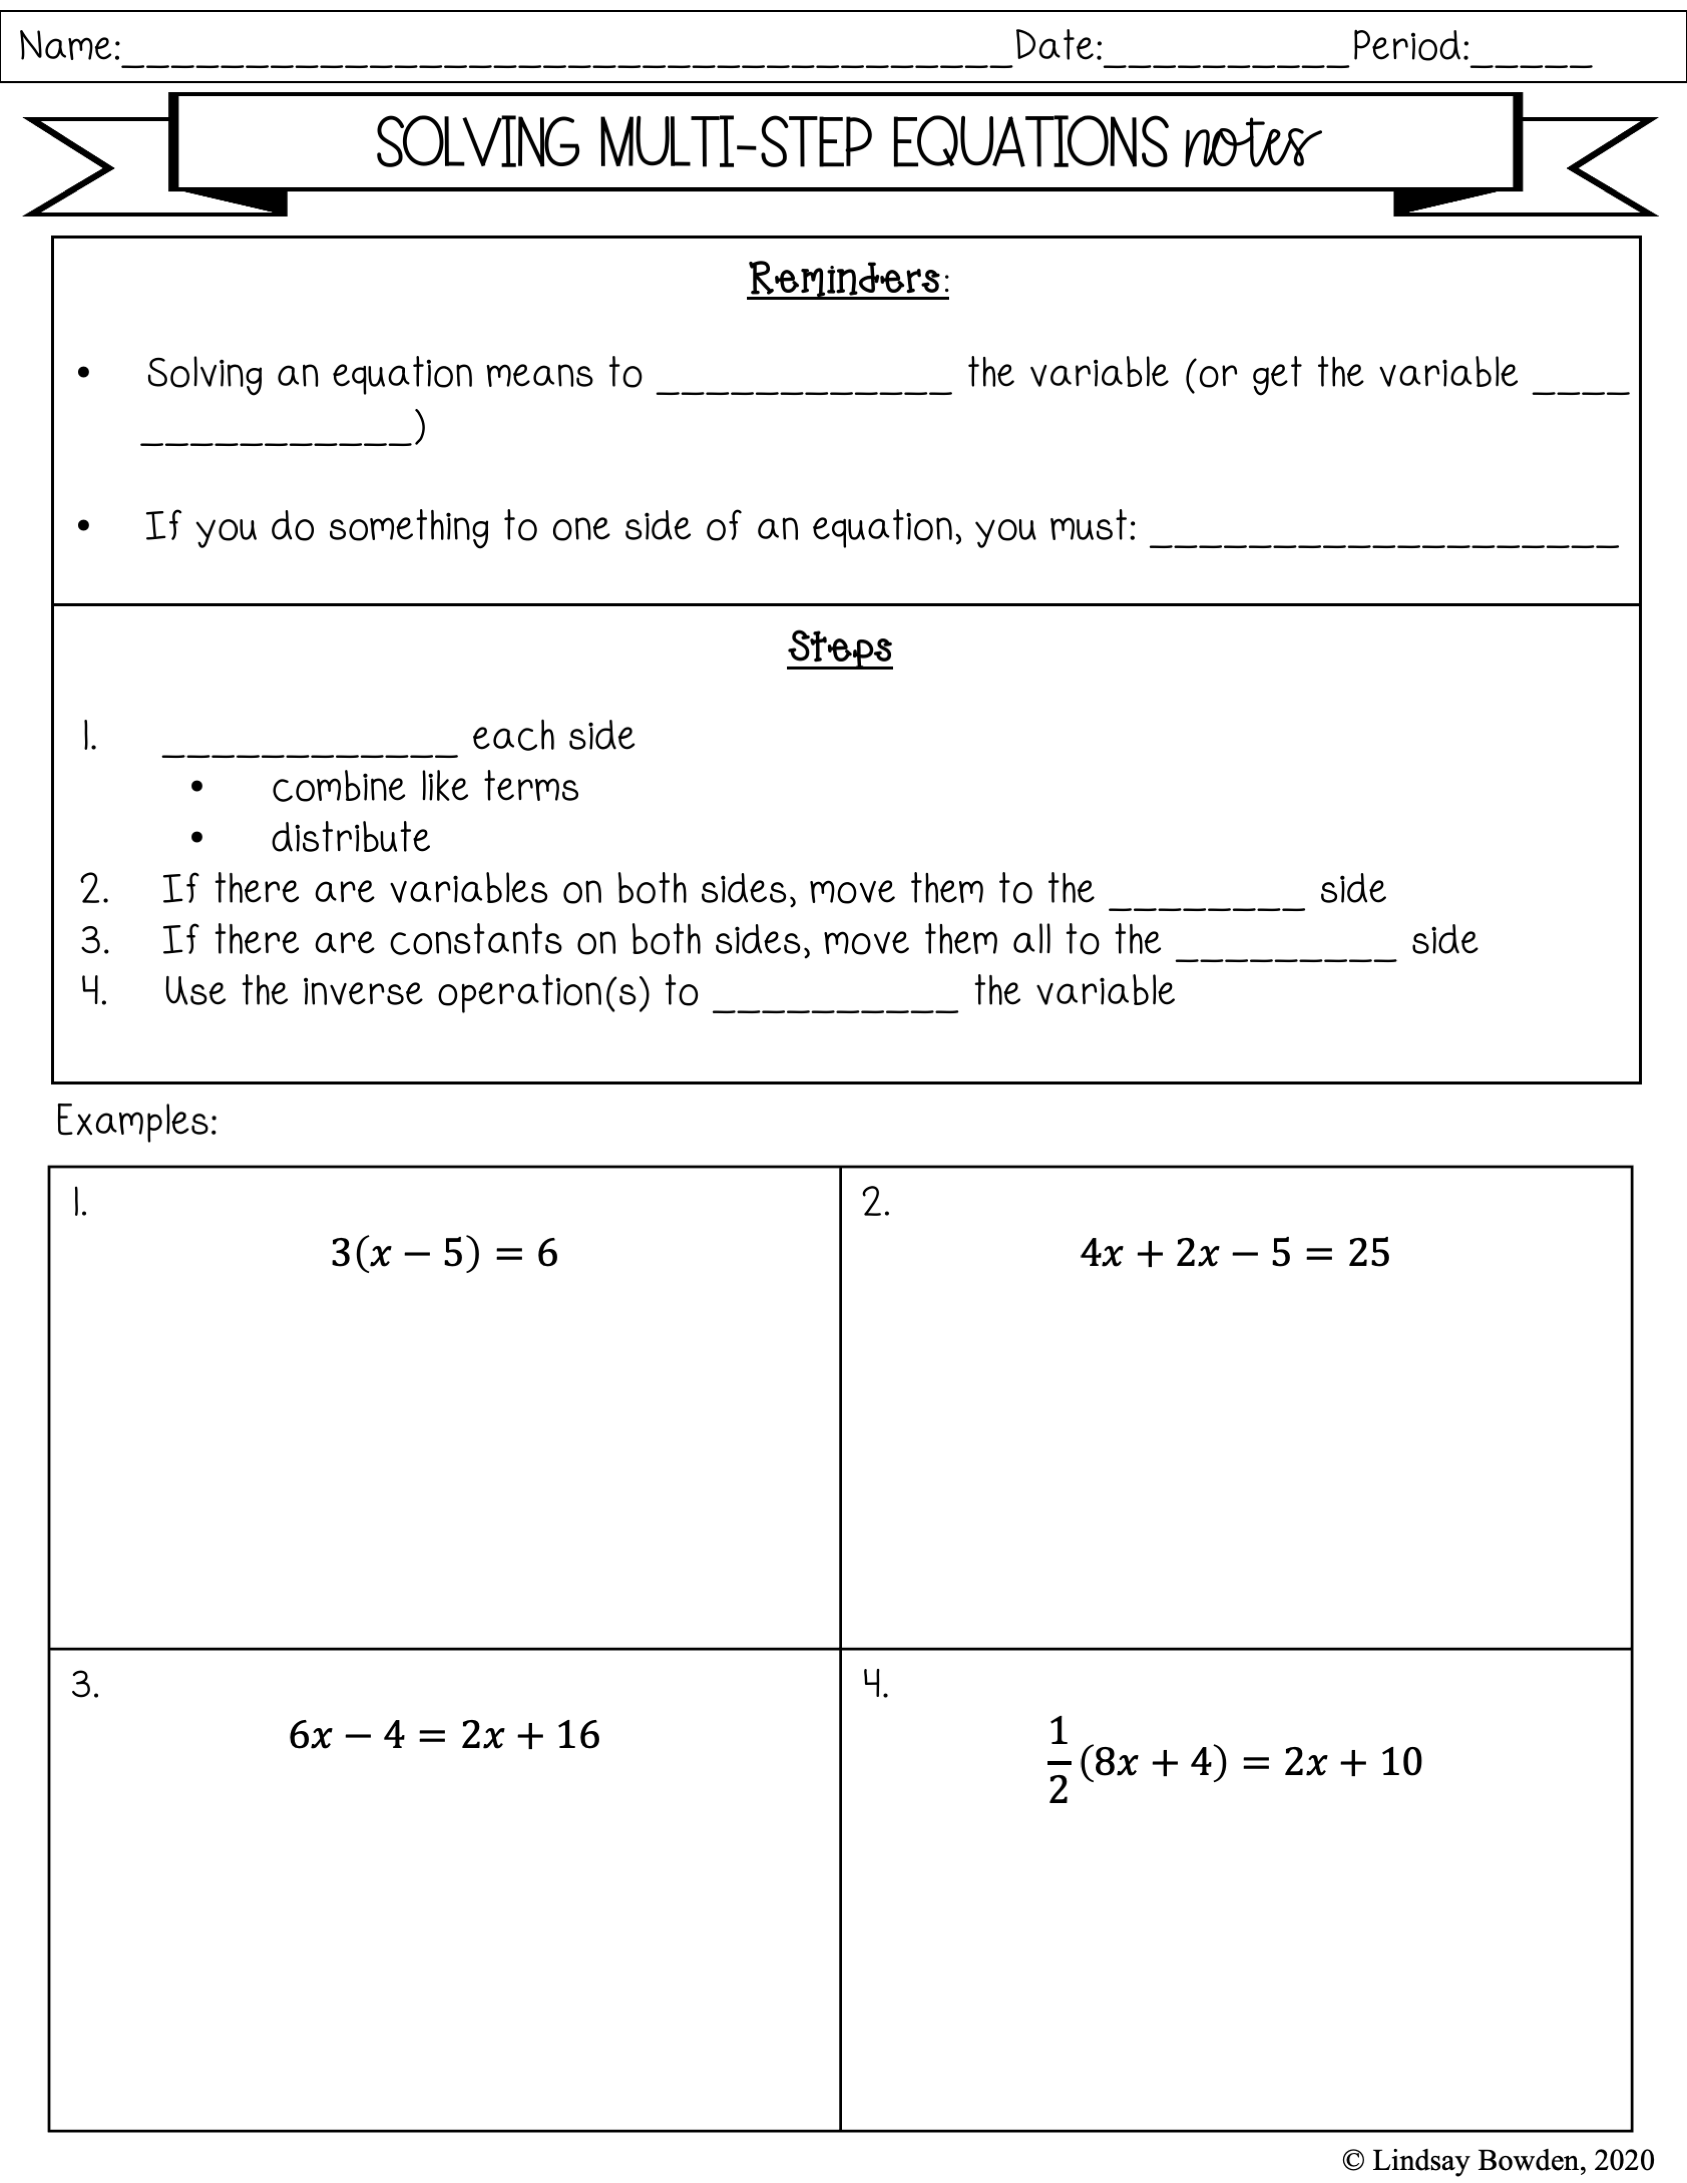 Multi-Step Equation Notes and Worksheets - Lindsay Bowden Intended For 2 Step Equations Worksheet